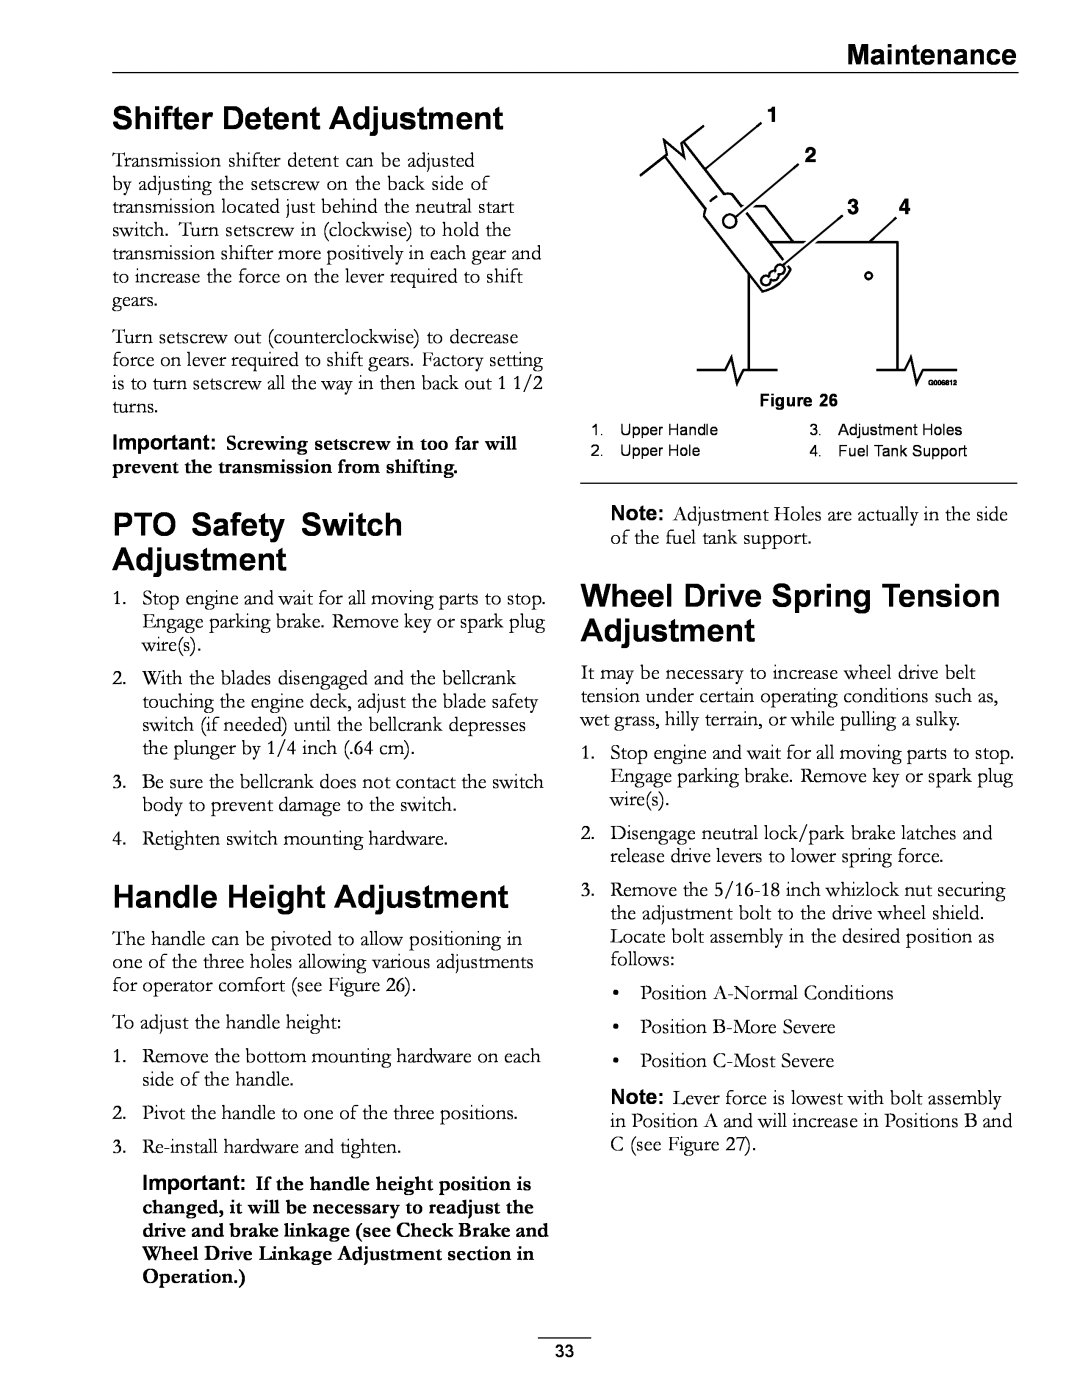 Exmark 4500-689 manual Shifter Detent Adjustment, PTO Safety Switch Adjustment, Handle Height Adjustment, Maintenance 